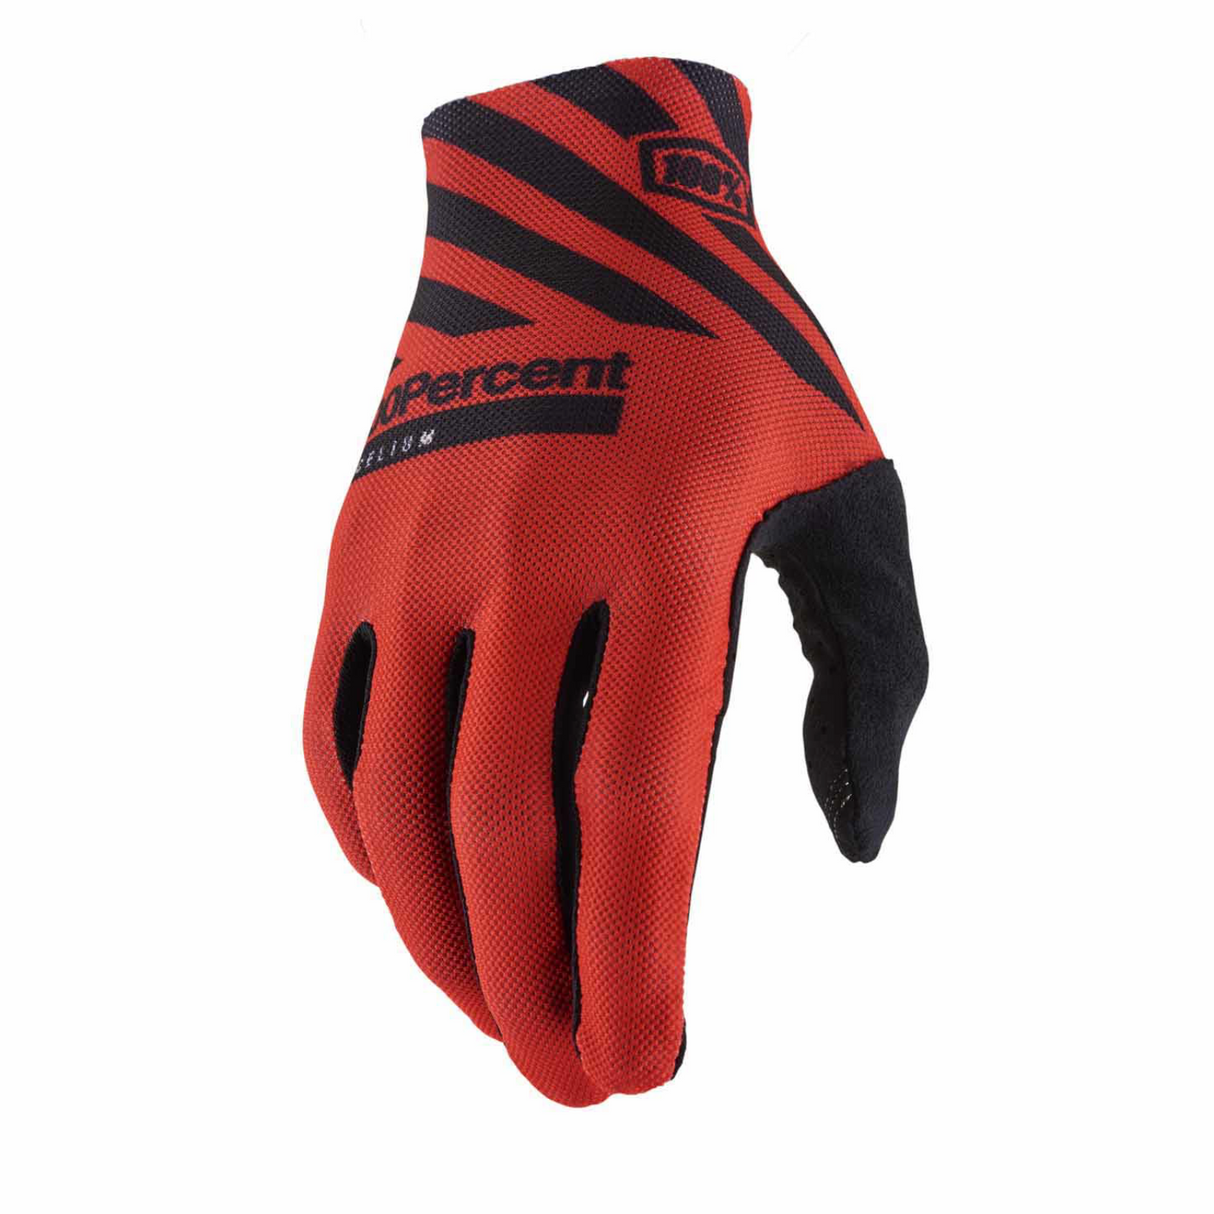 100% CELIUM Full Finger Cycling Mountain Bike Gloves Red - Large